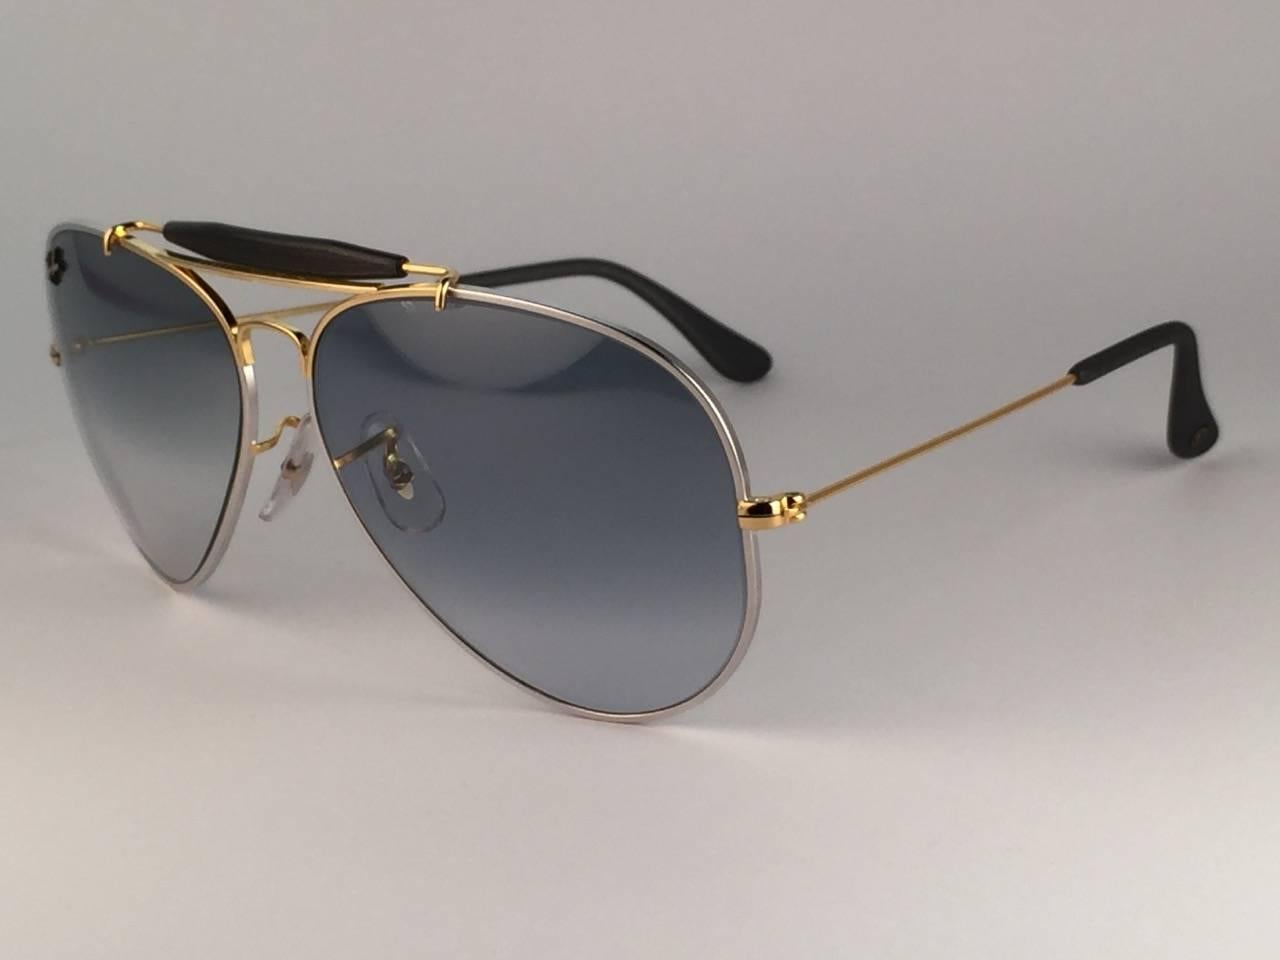 Gray New Ray Ban Precious Metals 24k Gold/Platinum B&L Outdoorsman 62' USA Sunglasses